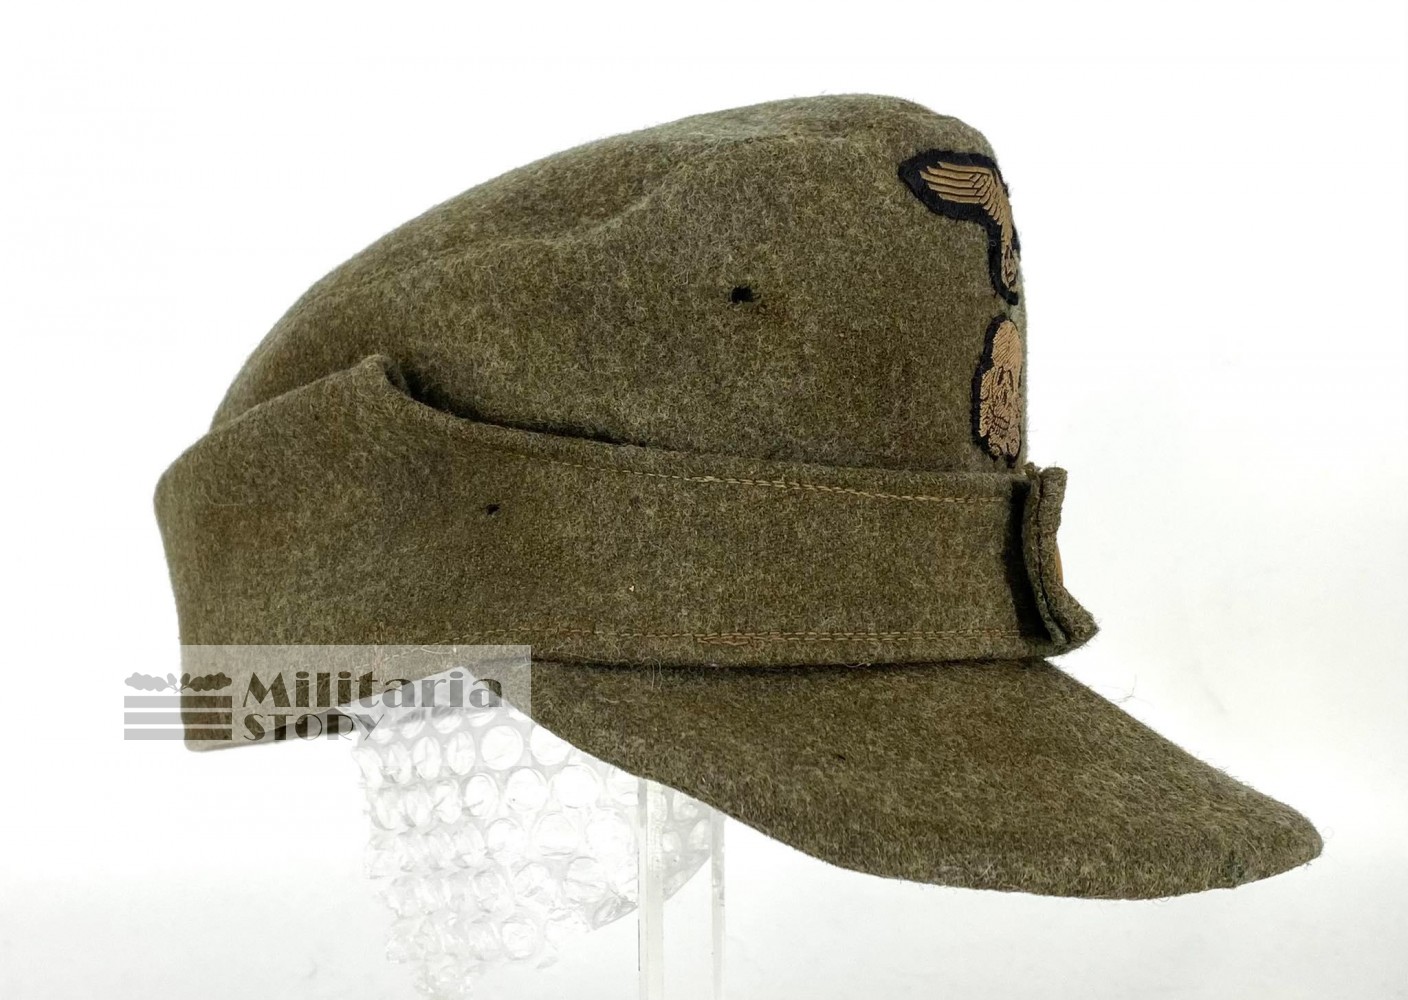 M43 Waffen SS Field Cap  - M43 Waffen SS Field Cap : pre-war German Headgear